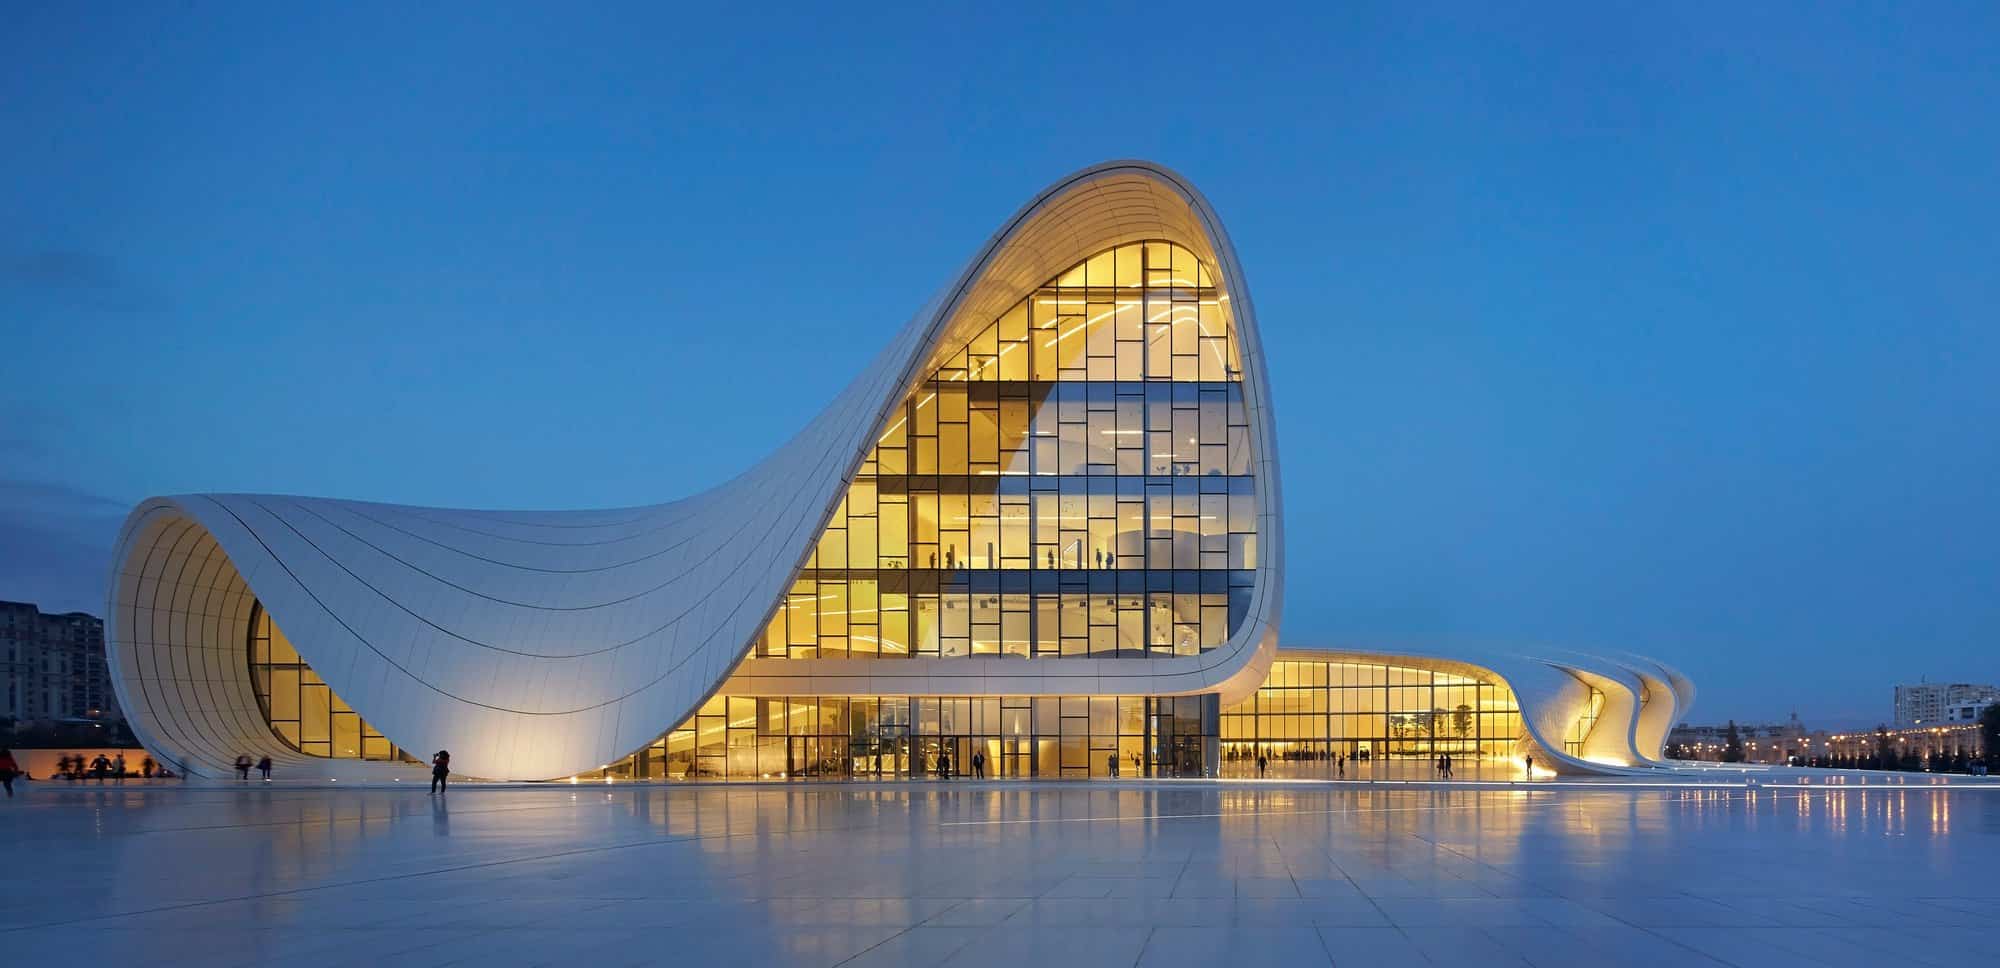 10 proyectos de arquitectura moderna sorprendentes